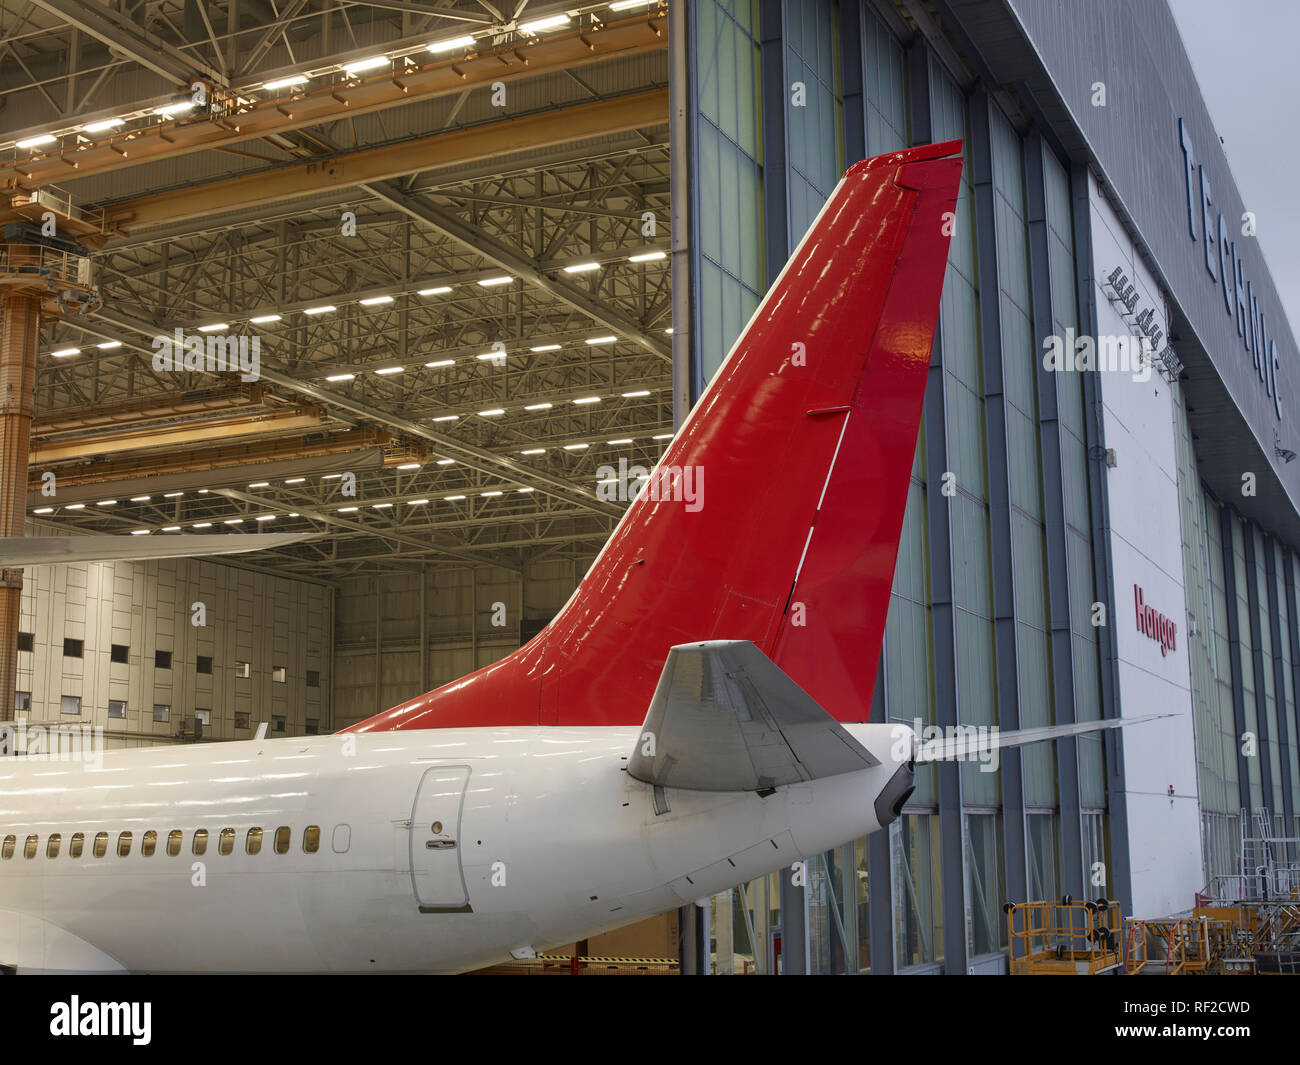 Plane hangar Stock Photo